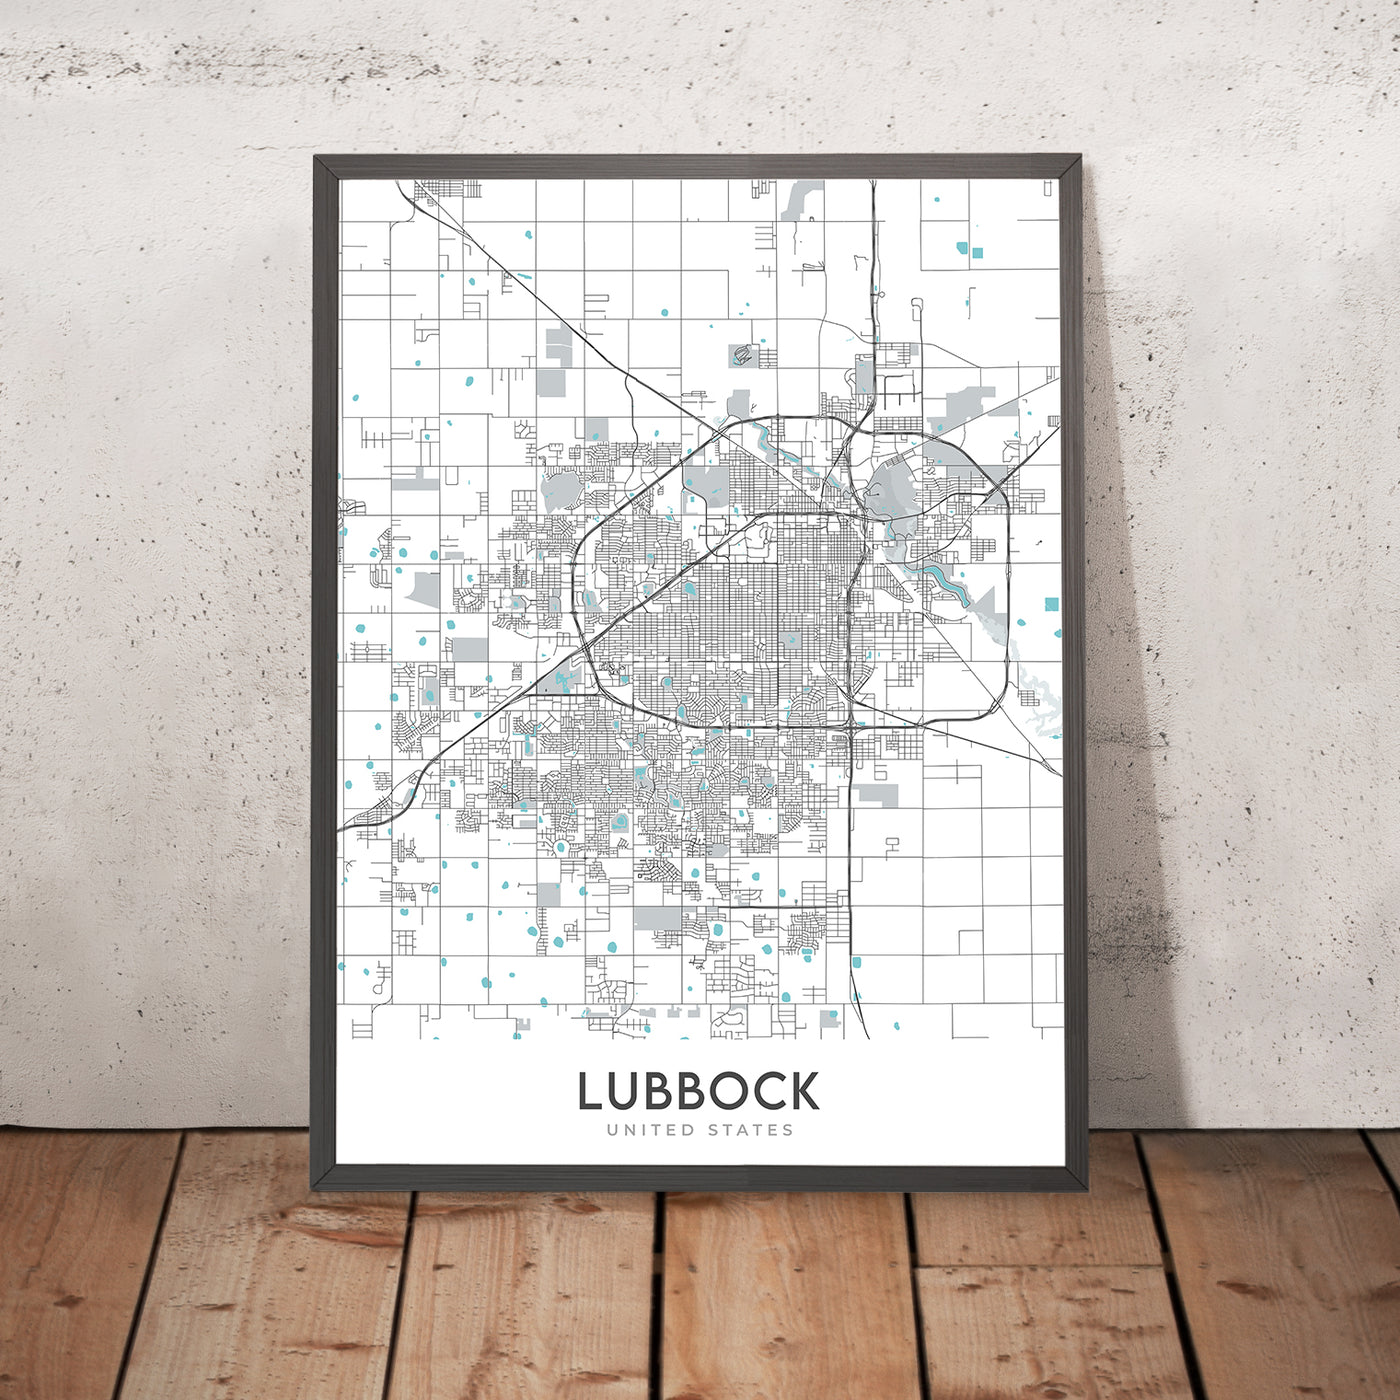 Modern City Map of Lubbock, TX: Texas Tech University, Jones AT&T Stadium, Canyon Lakes, US-84, US-87